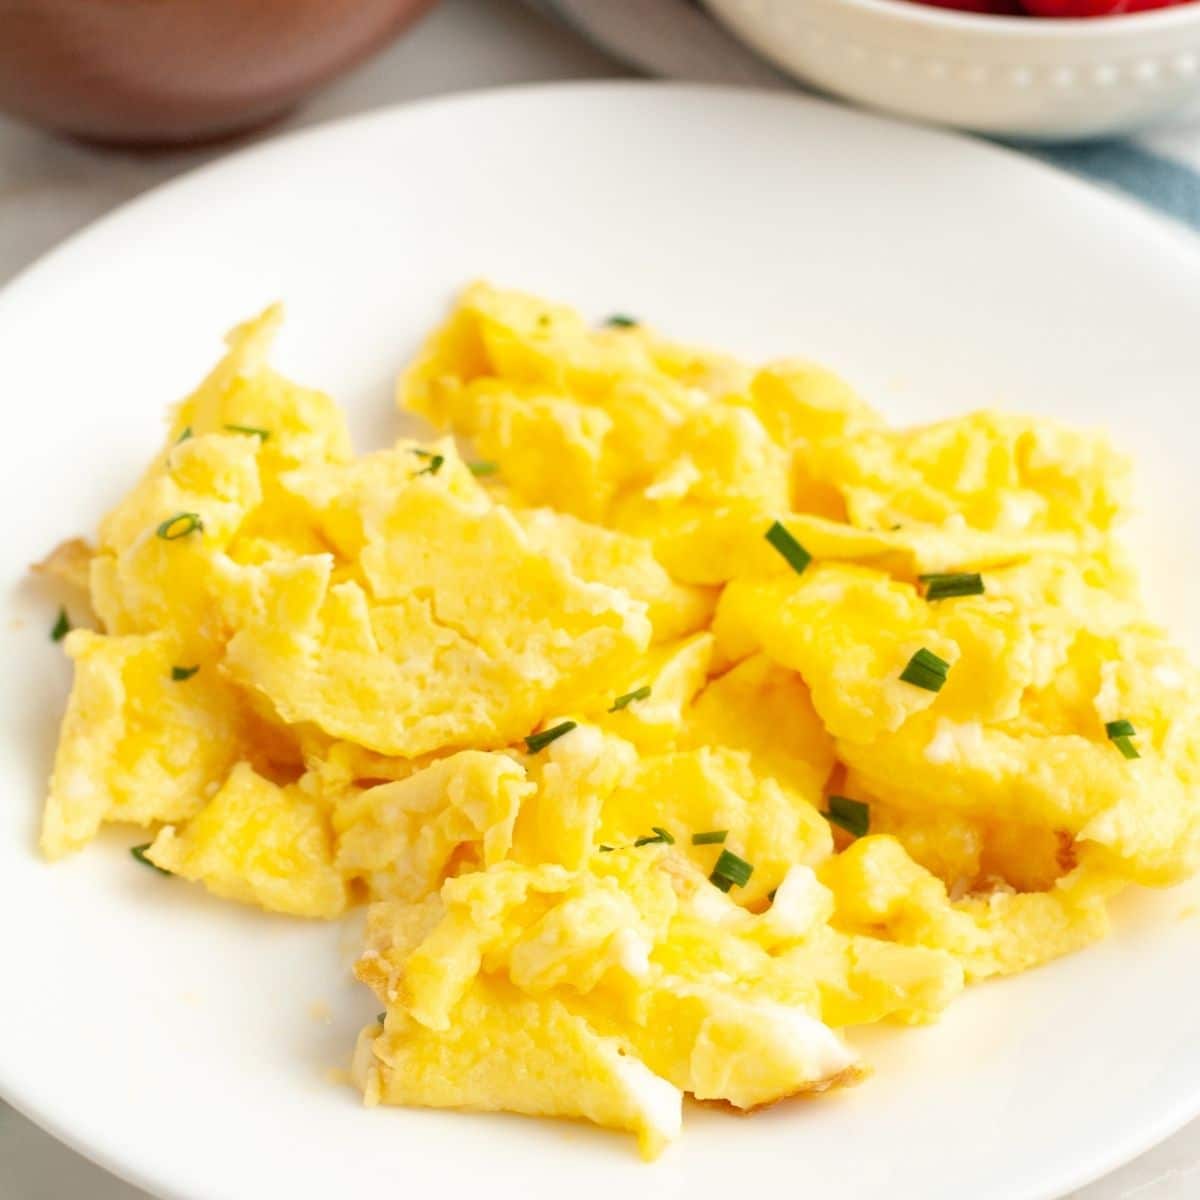 https://www.foodlovinfamily.com/wp-content/uploads/2021/07/scrambled-eggs-in-air-fryer.jpg